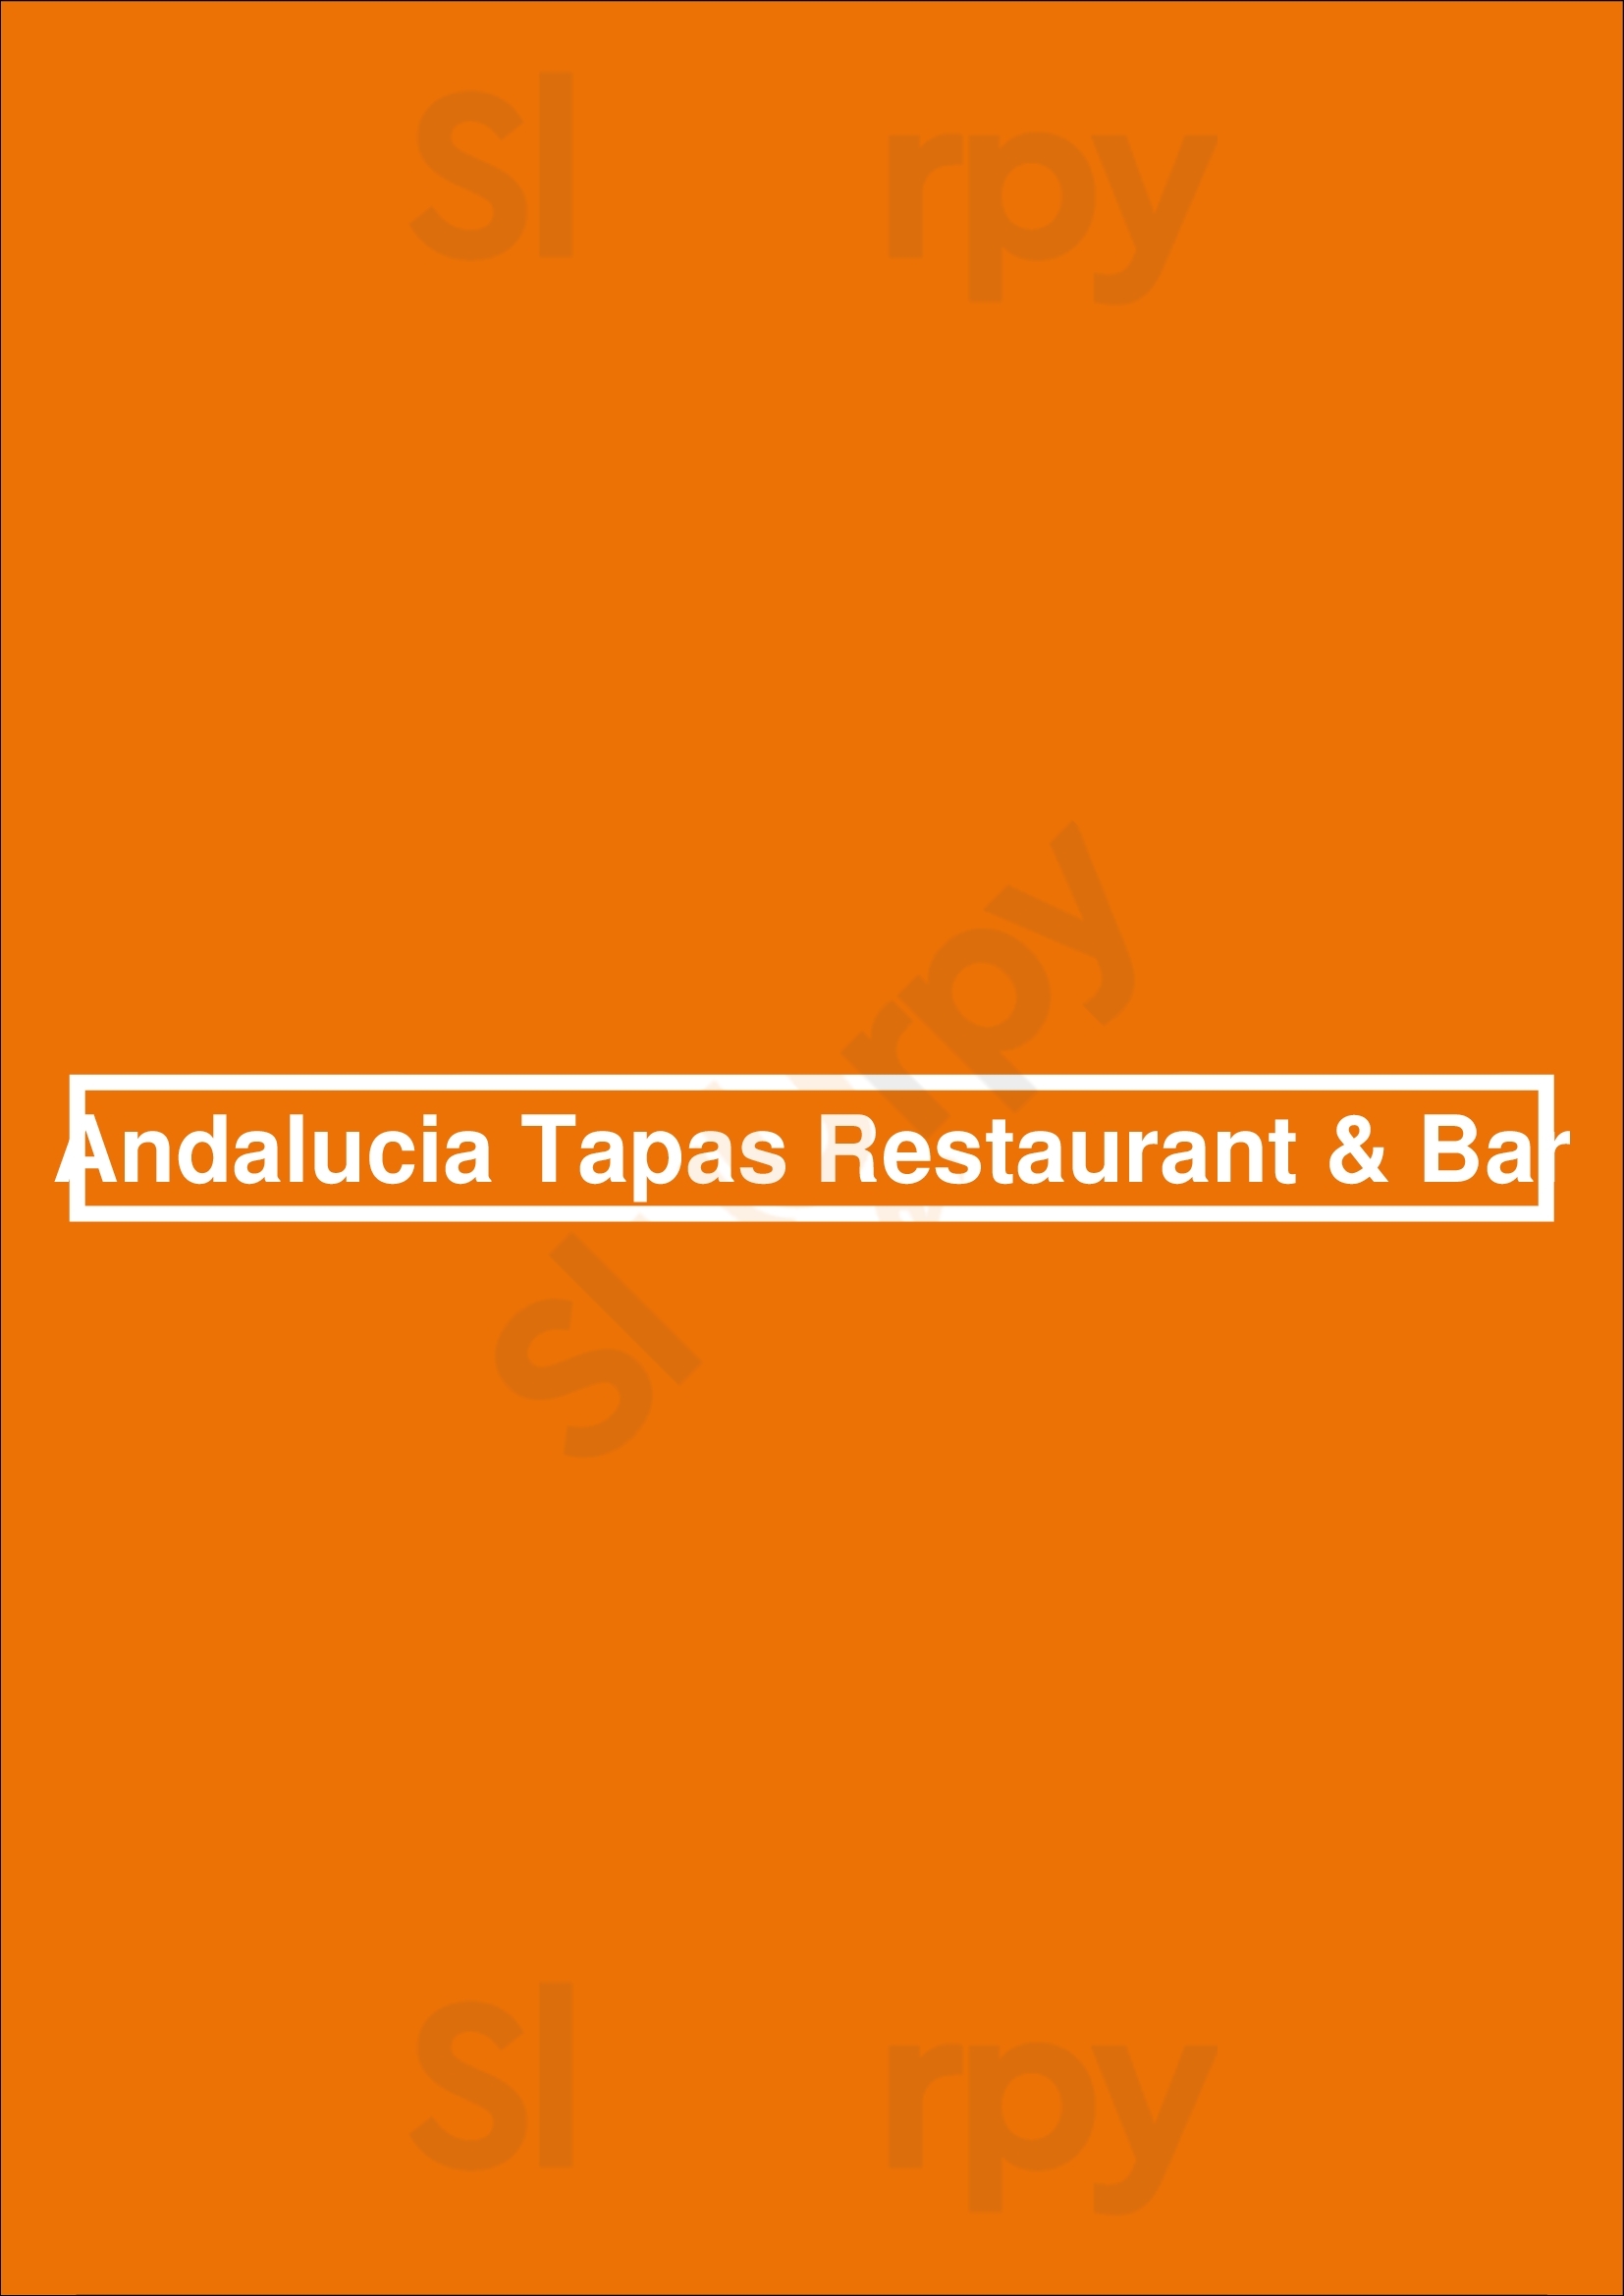 Andalucia Tapas Restaurant & Bar Houston Menu - 1